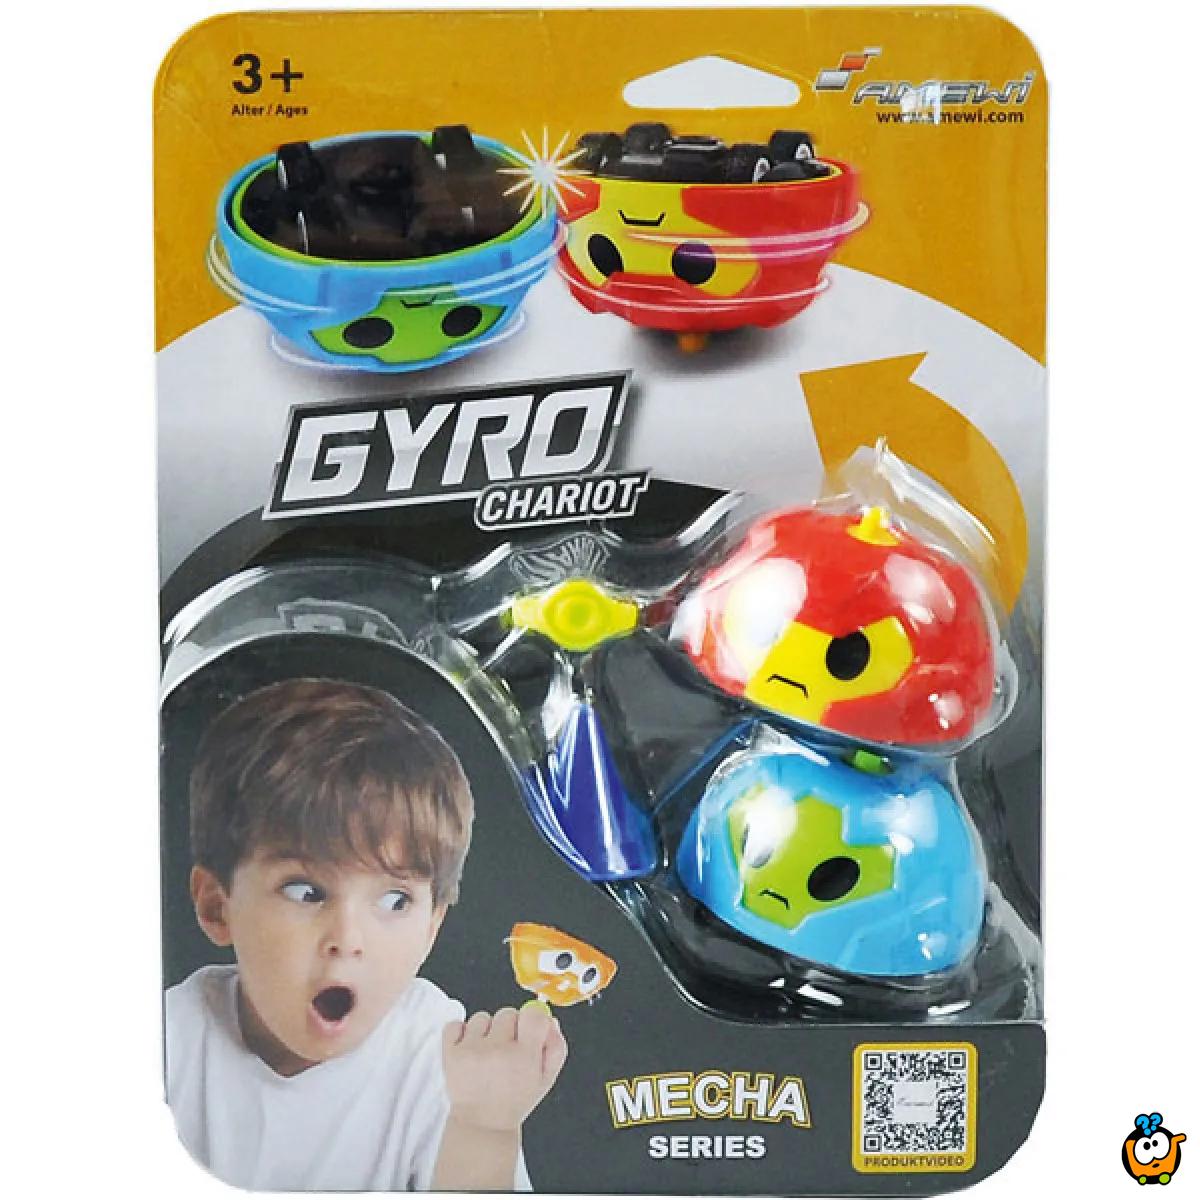 Gyro Chariot borba buba - robot bube set za igru   